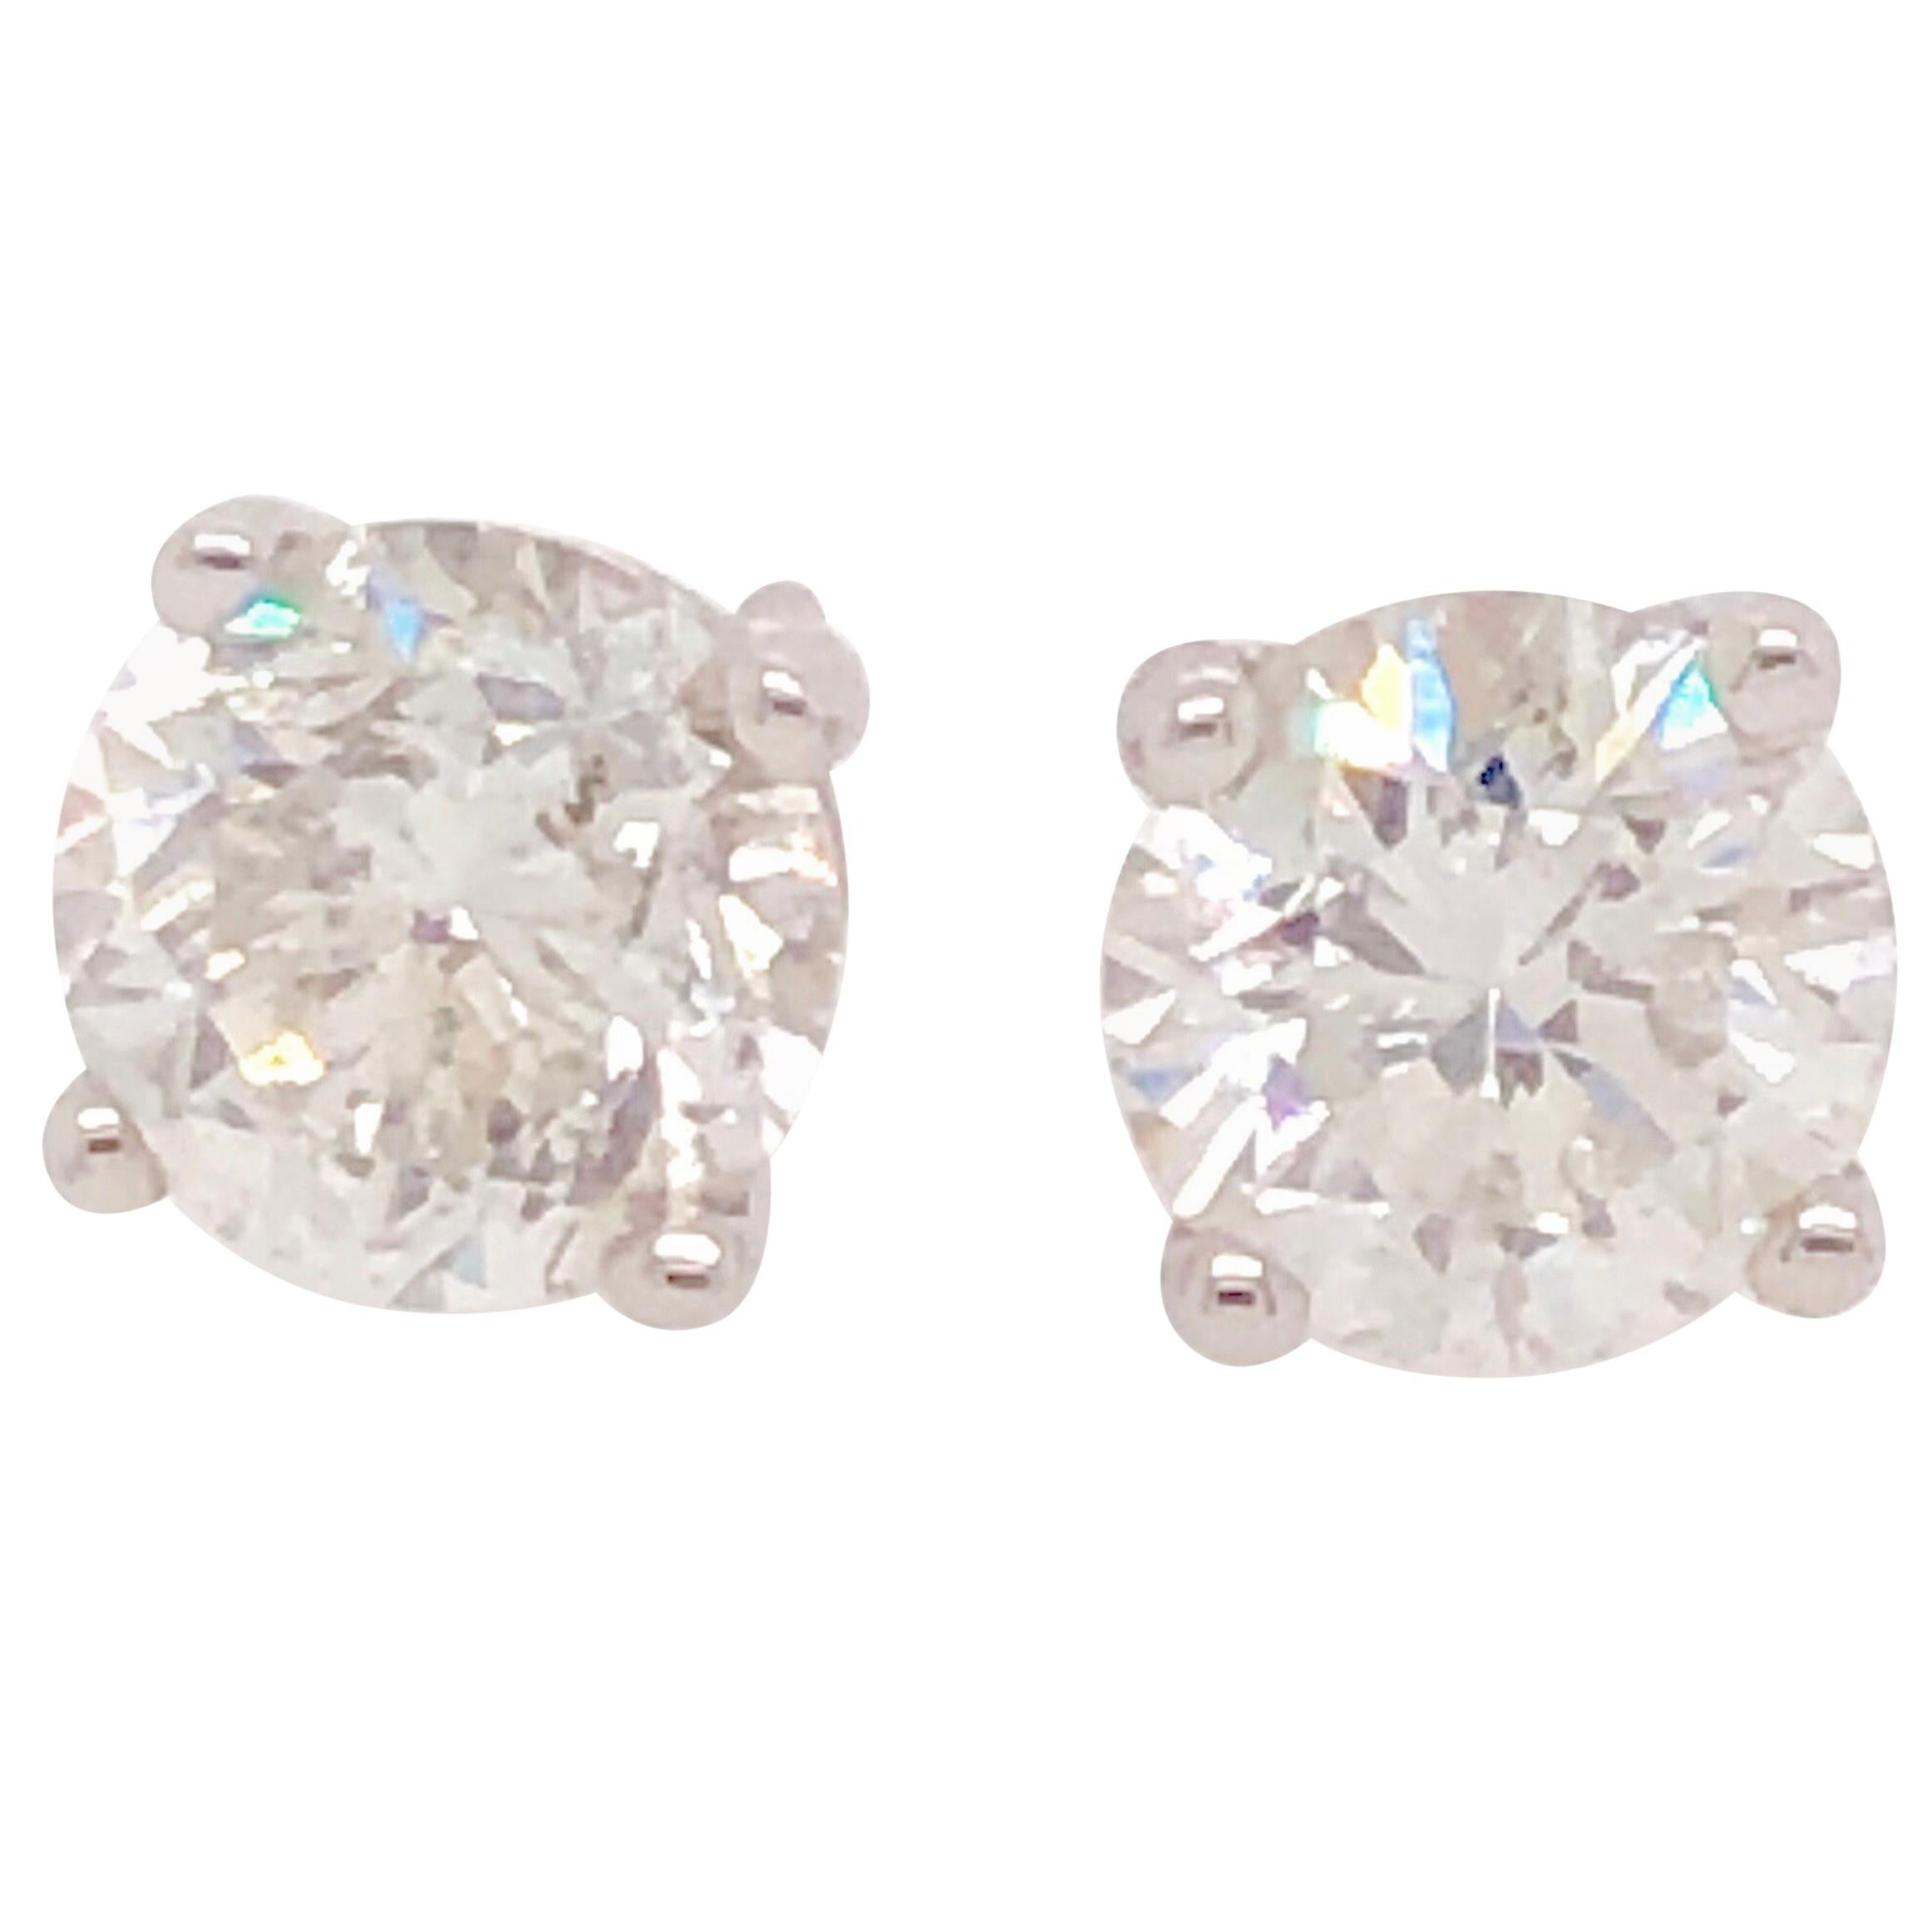 2.60 Carat Round Cut Diamond and White Gold Diamond Stud Earrings